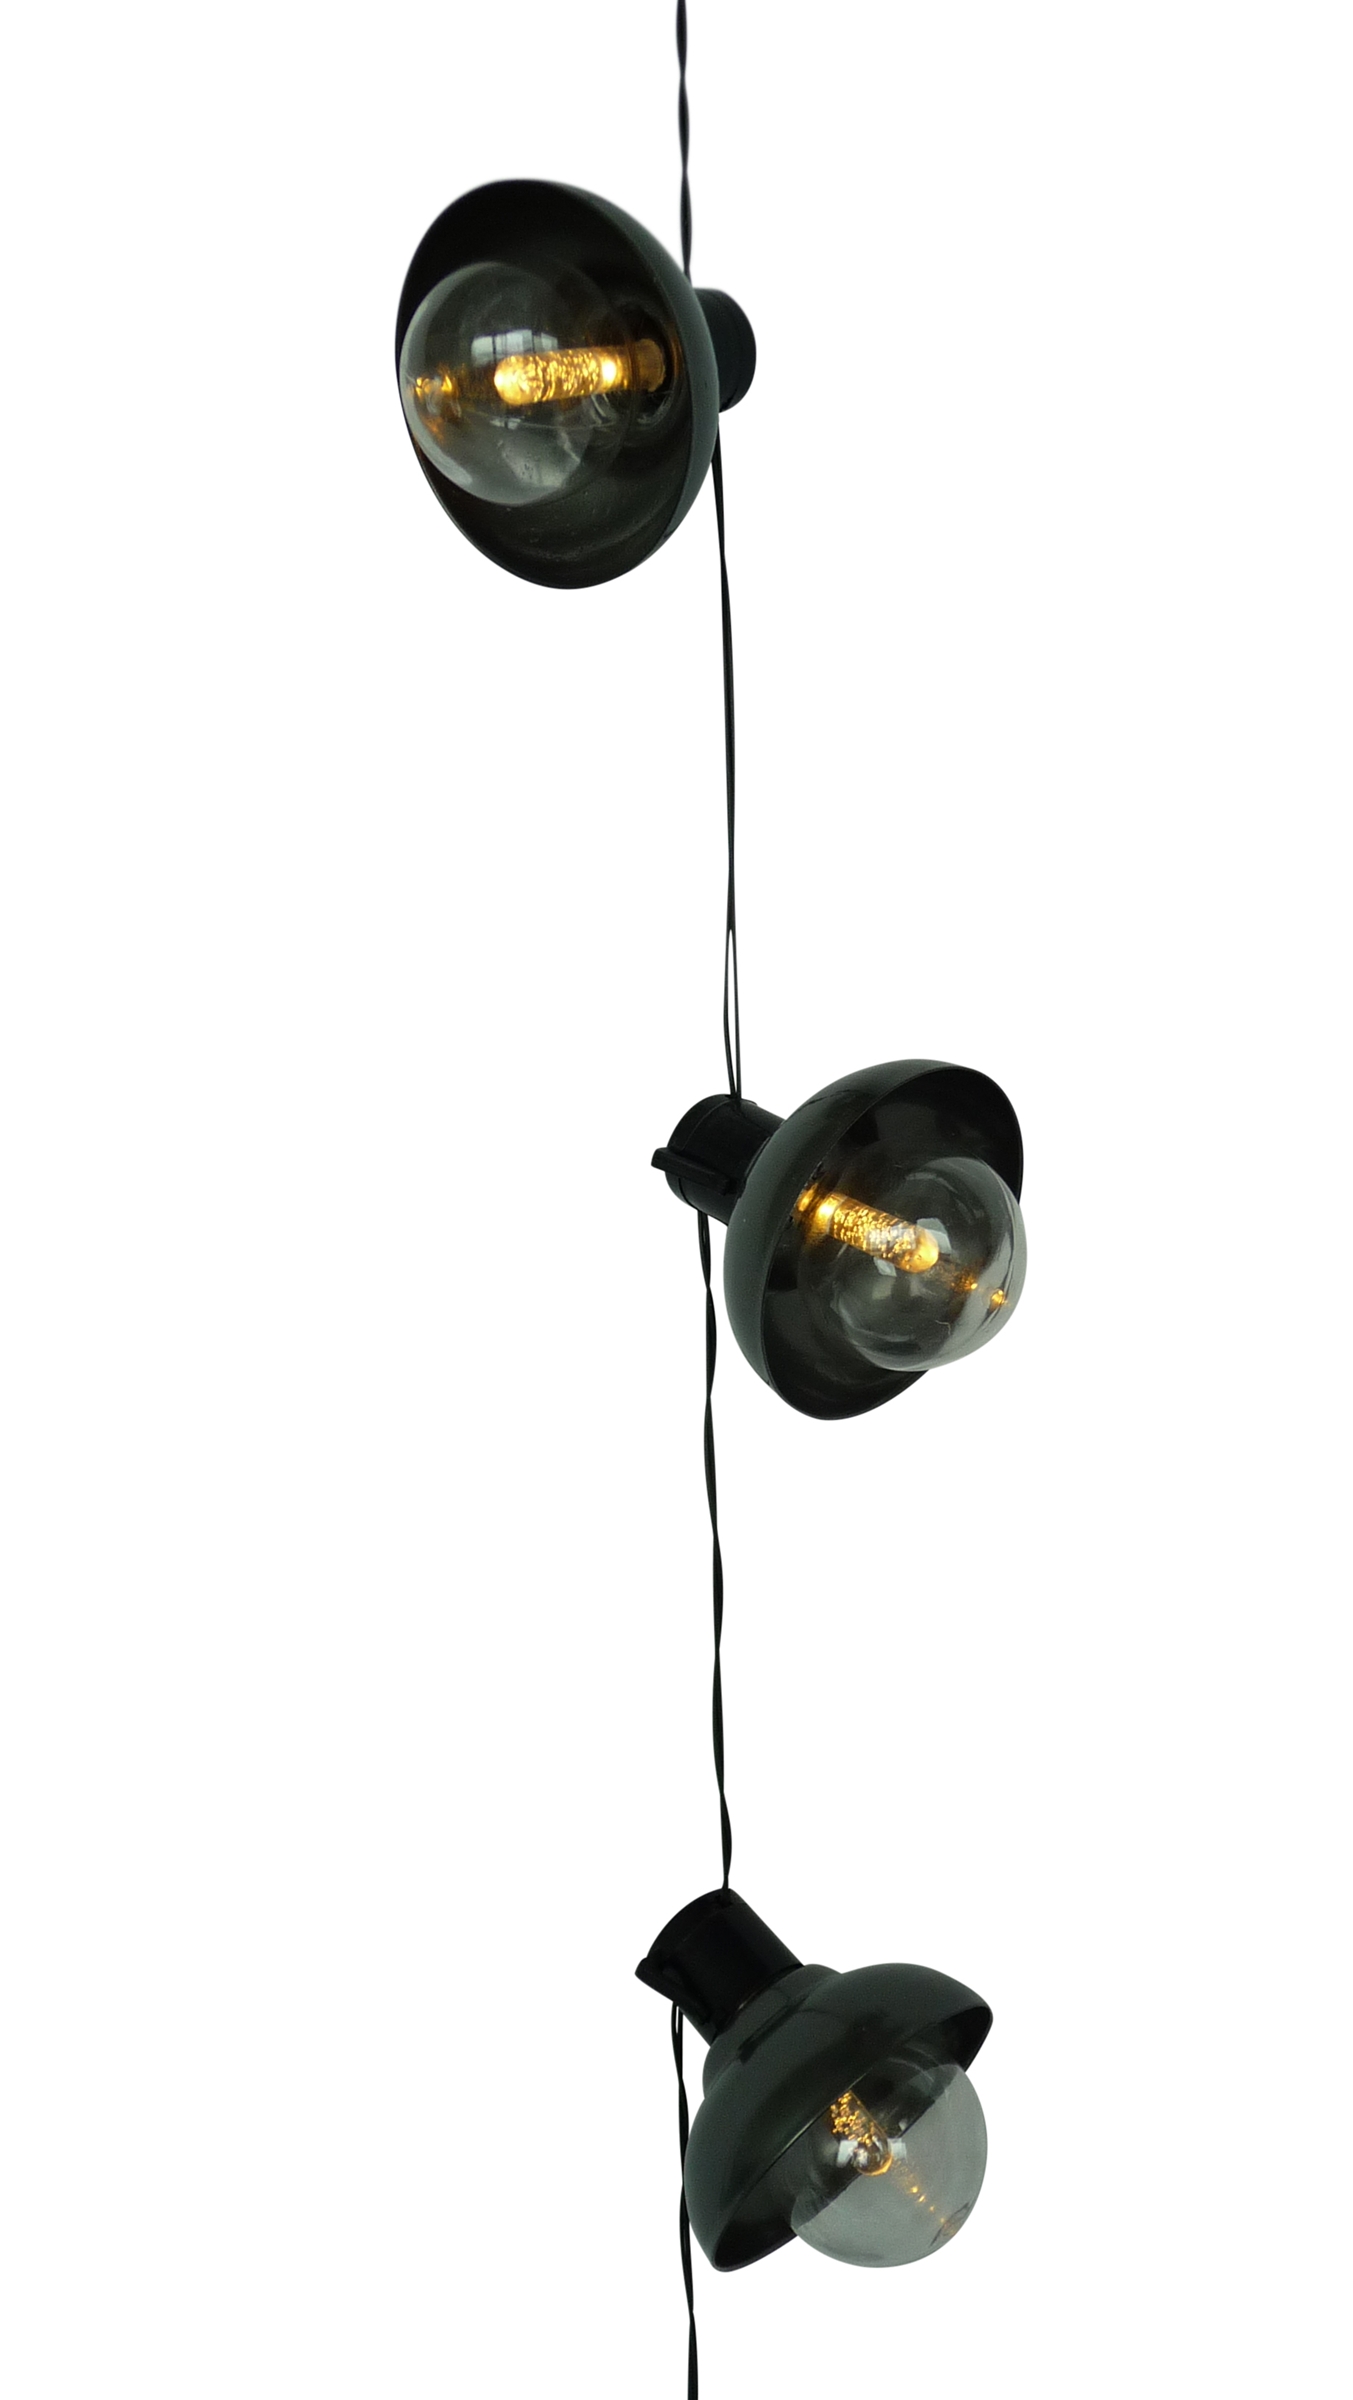 Lichterkette 10 Led Birnen Lampenschirm - Design aussen Lichterkette Glühlampen mit Schirm, Batterie